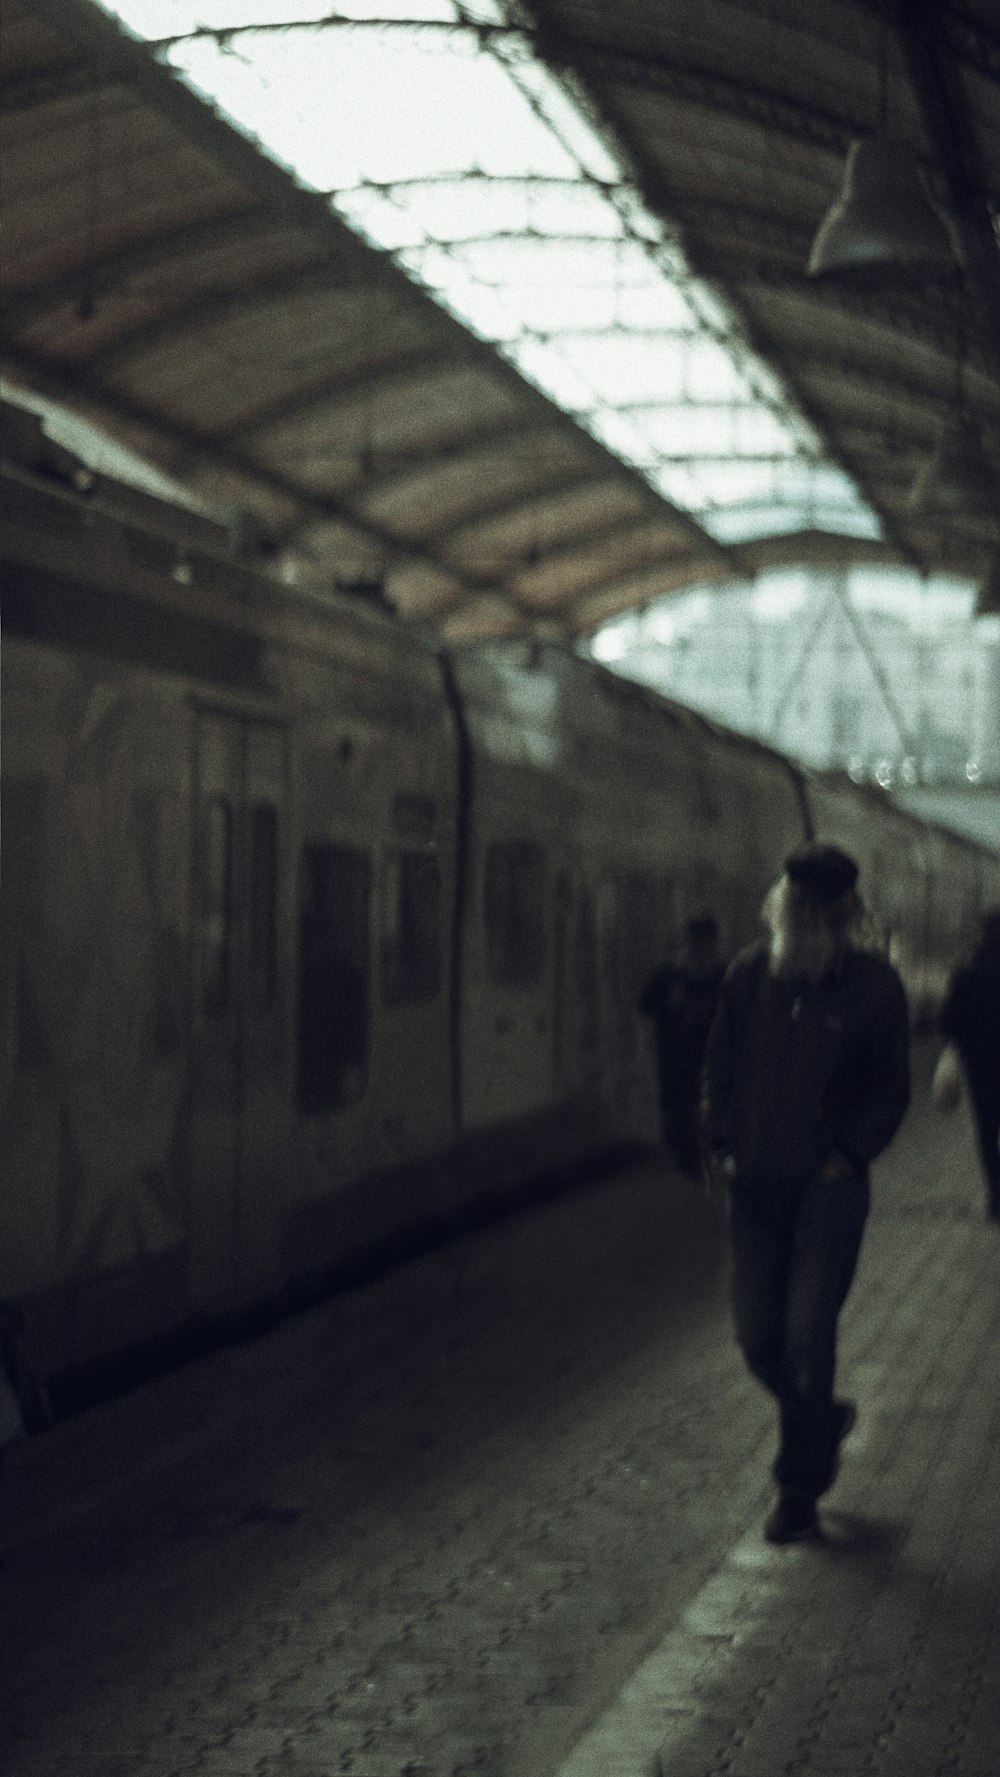 people walking on train station during daytime